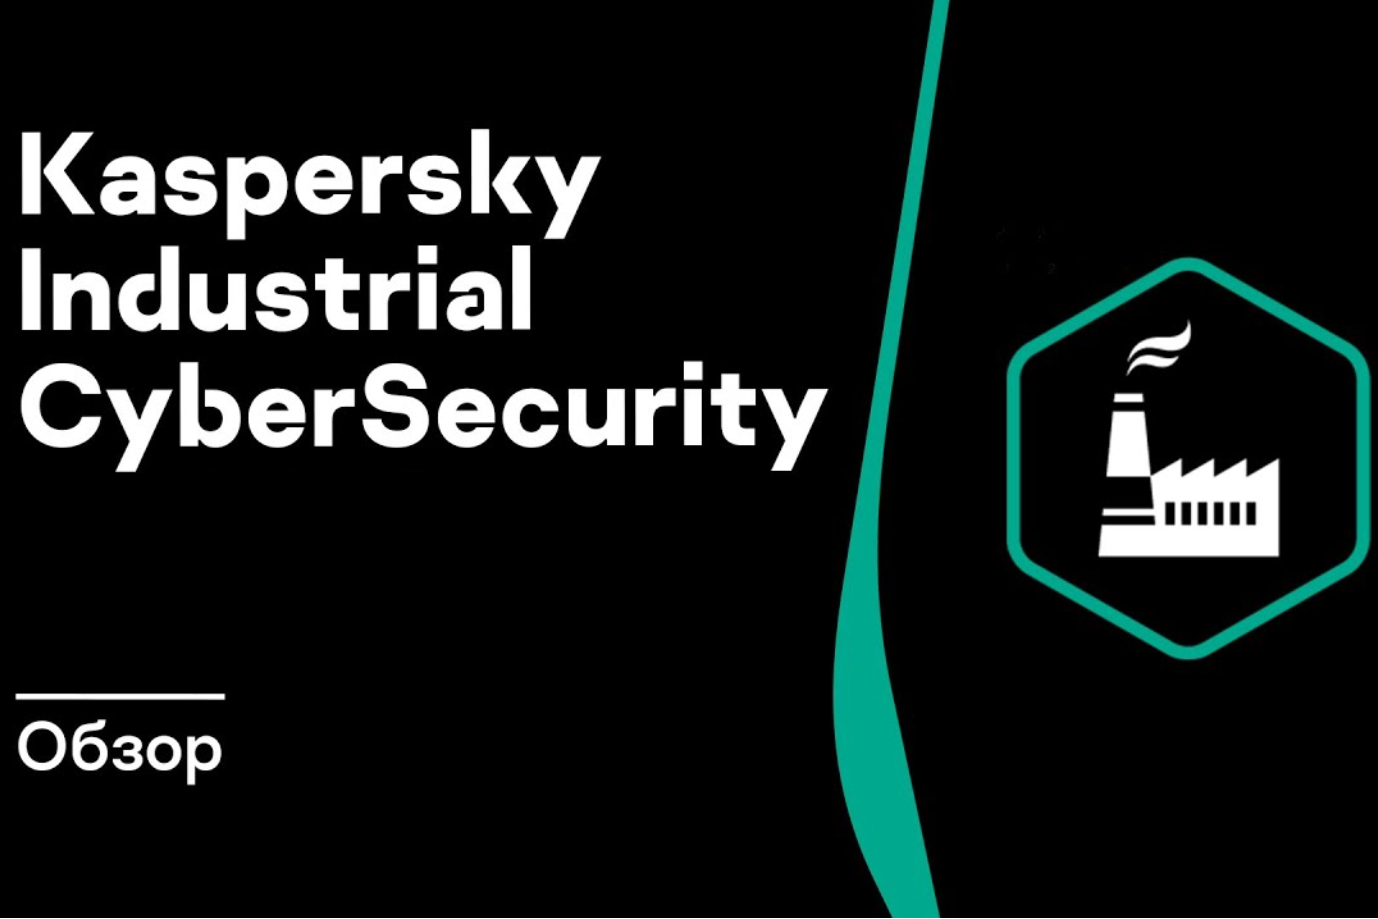 Kaspersky Industrial Cybersecurity Video